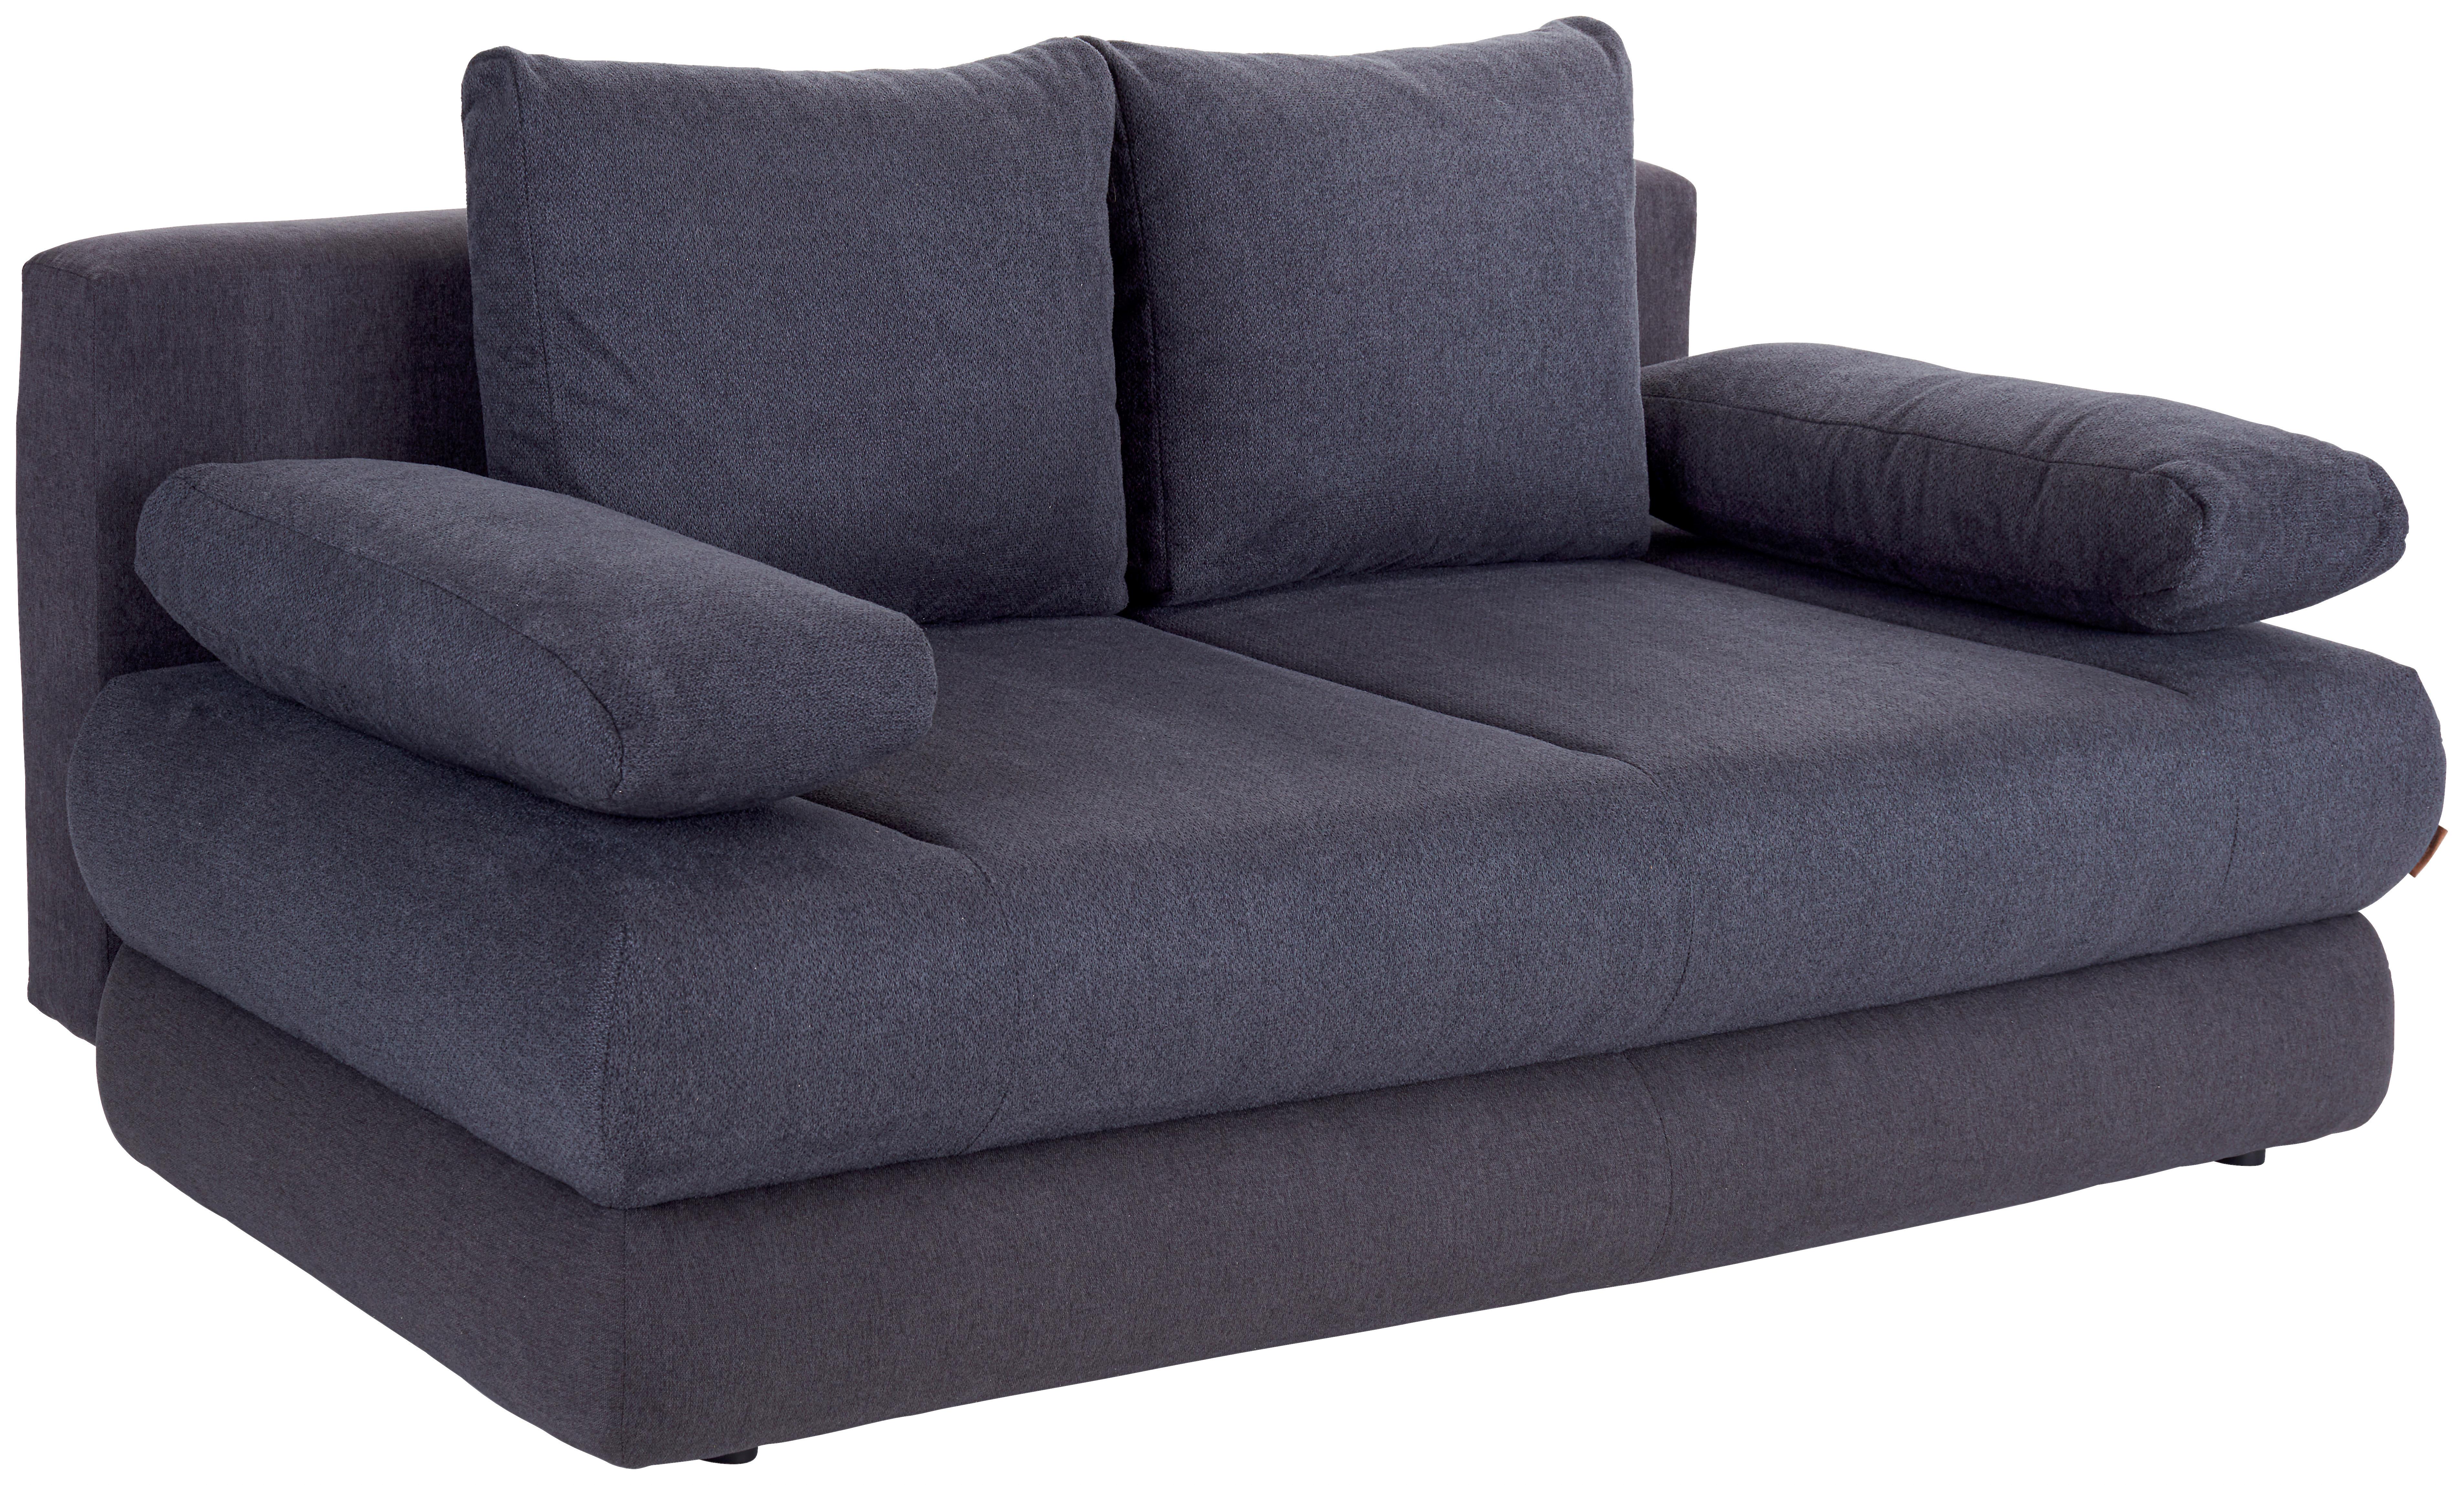 Canapea extensibilă Clipso - antracit, Basics, textil (212/93/90cm) - Ondega